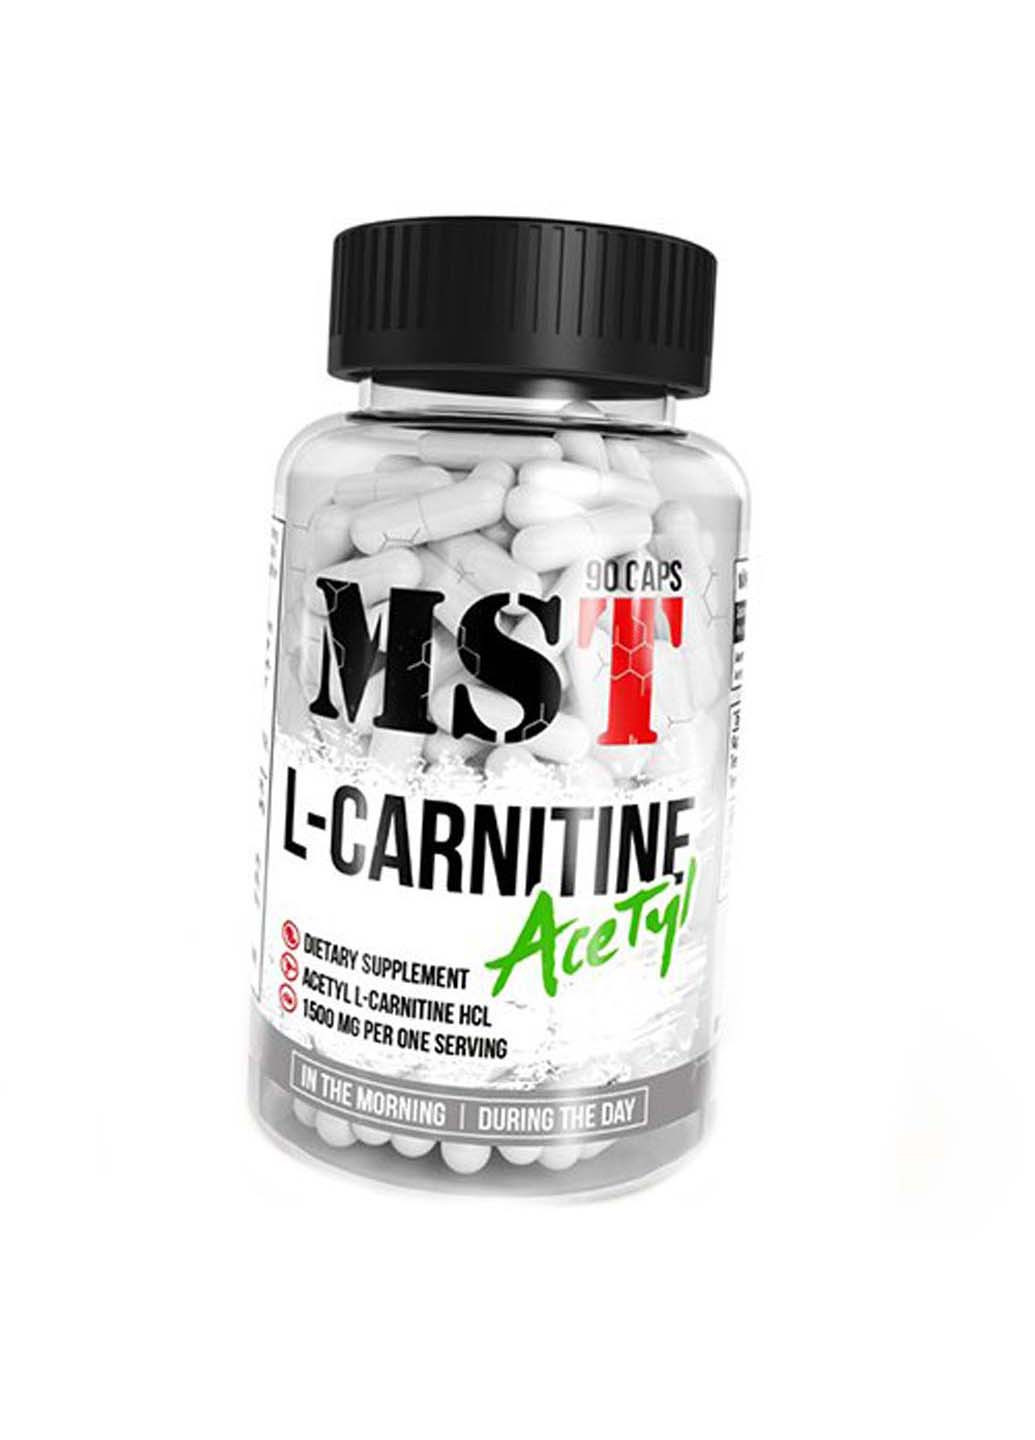 Ацетил L Карнитин гидрохлорид L-Carnitine Acetyl 90капс MST (275468438)